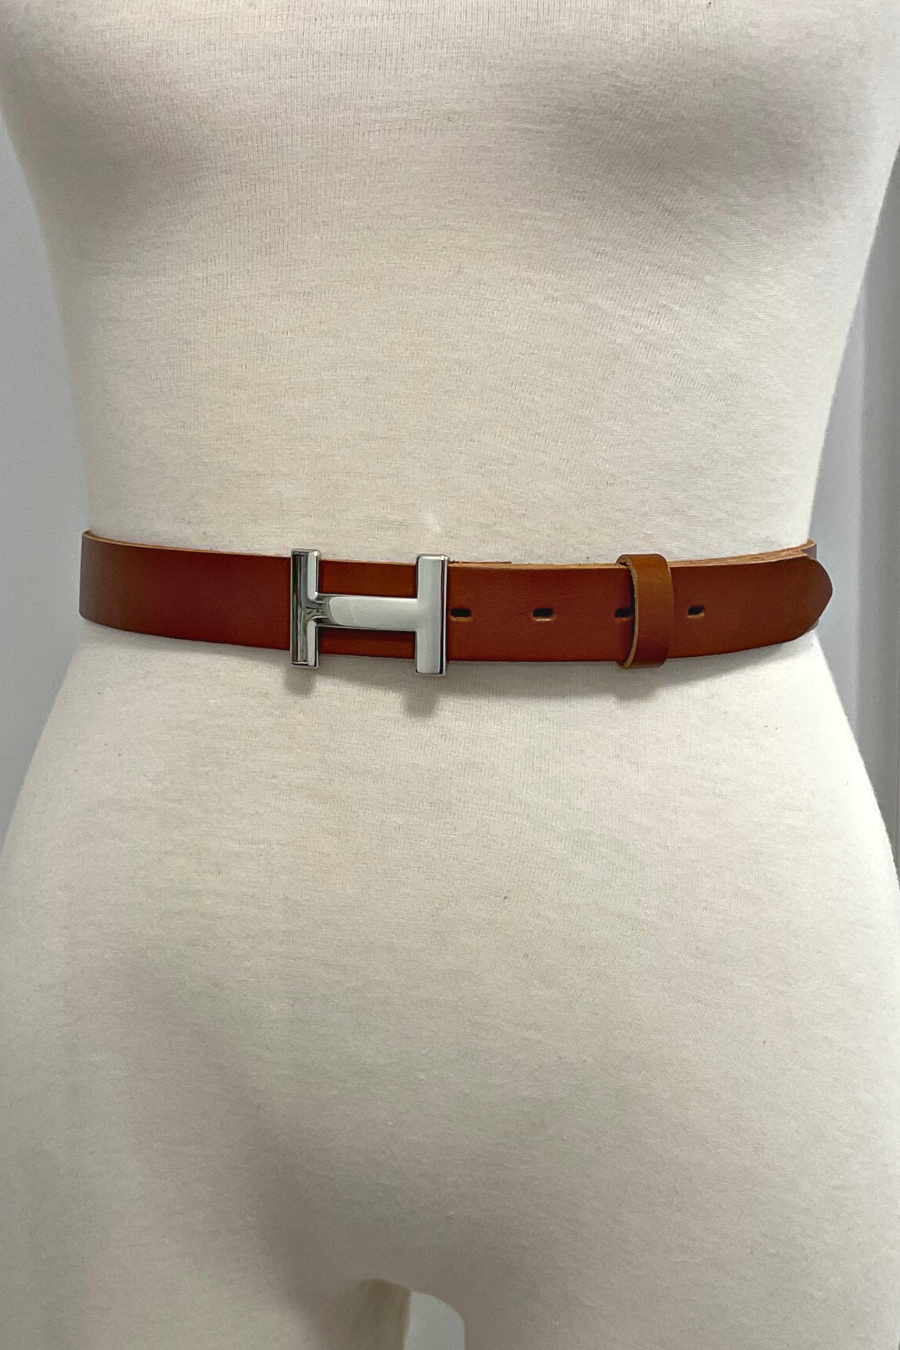 "H" Buckle Cognac Leather Belt